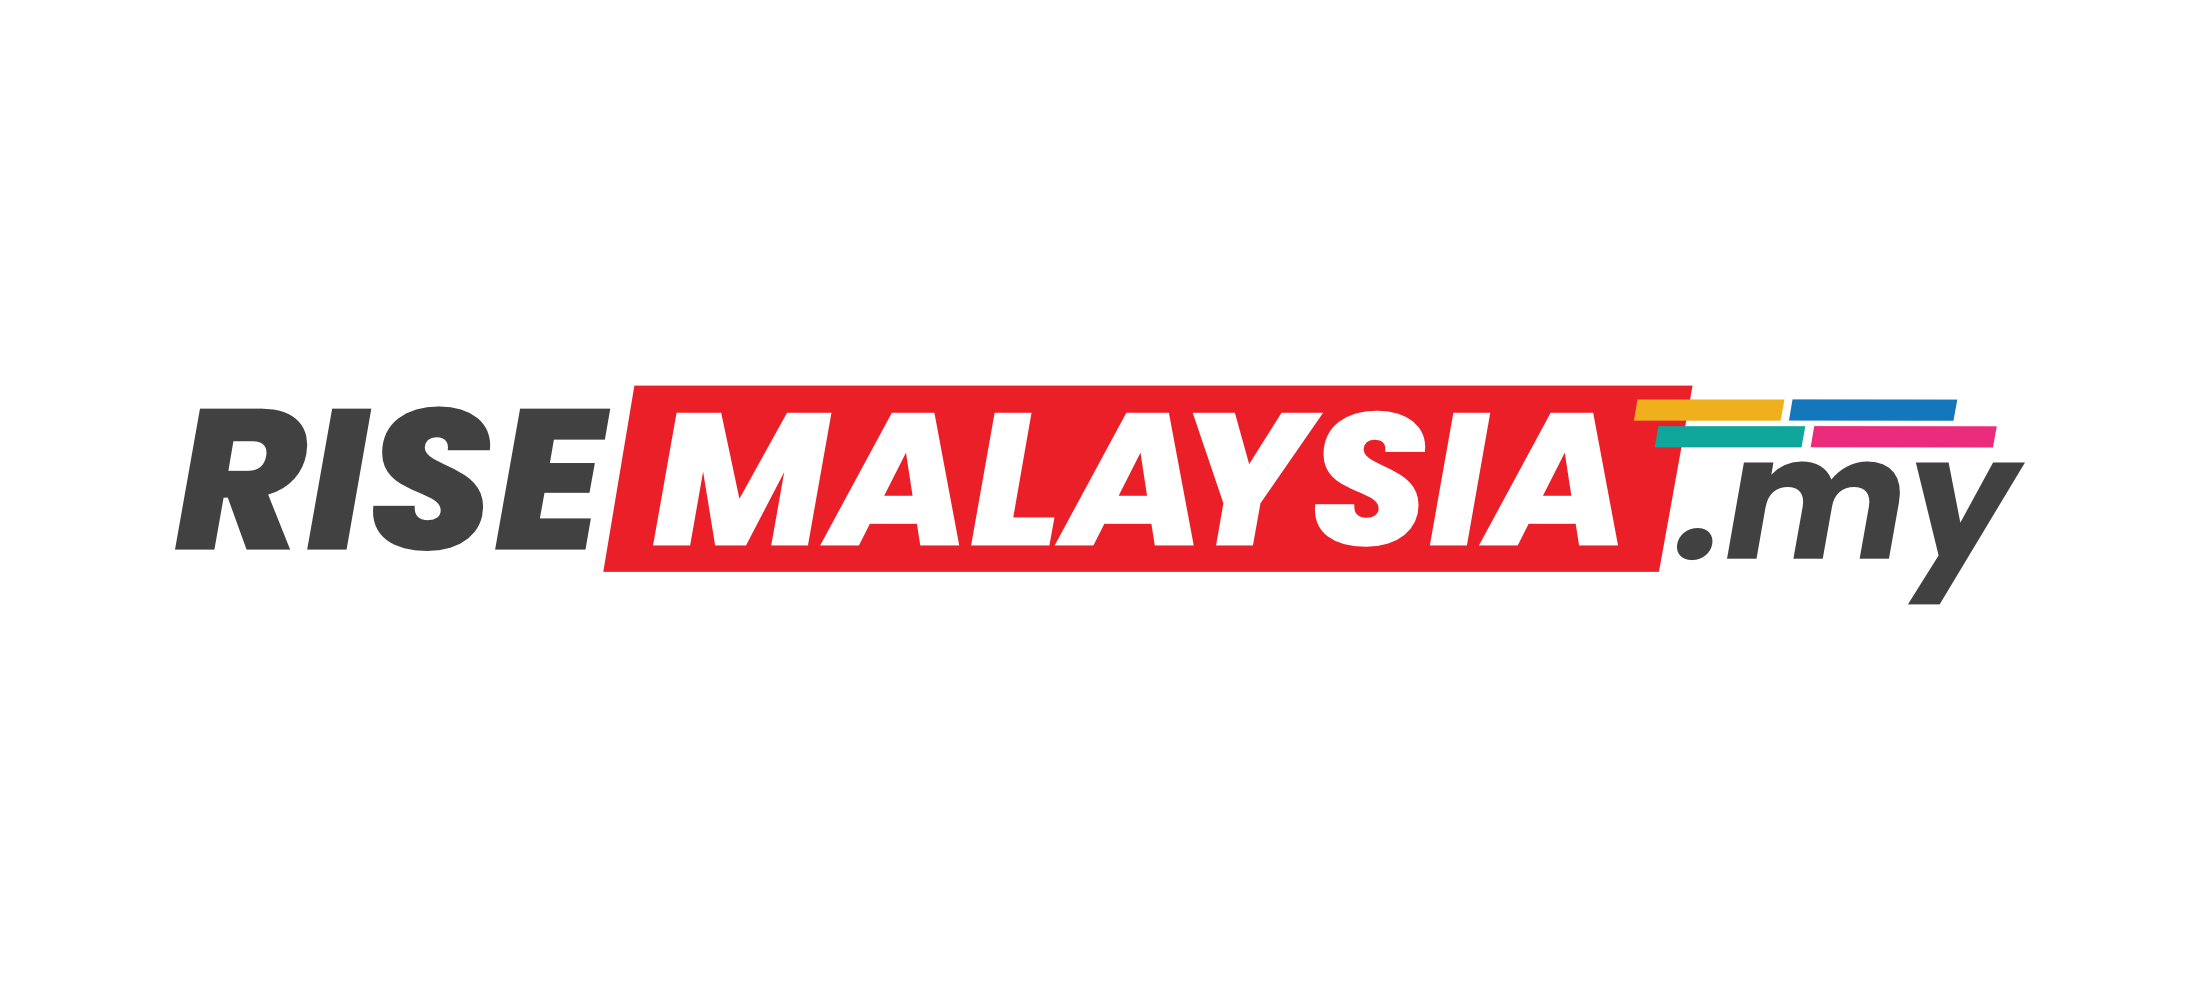 RiseMalaysia_logo